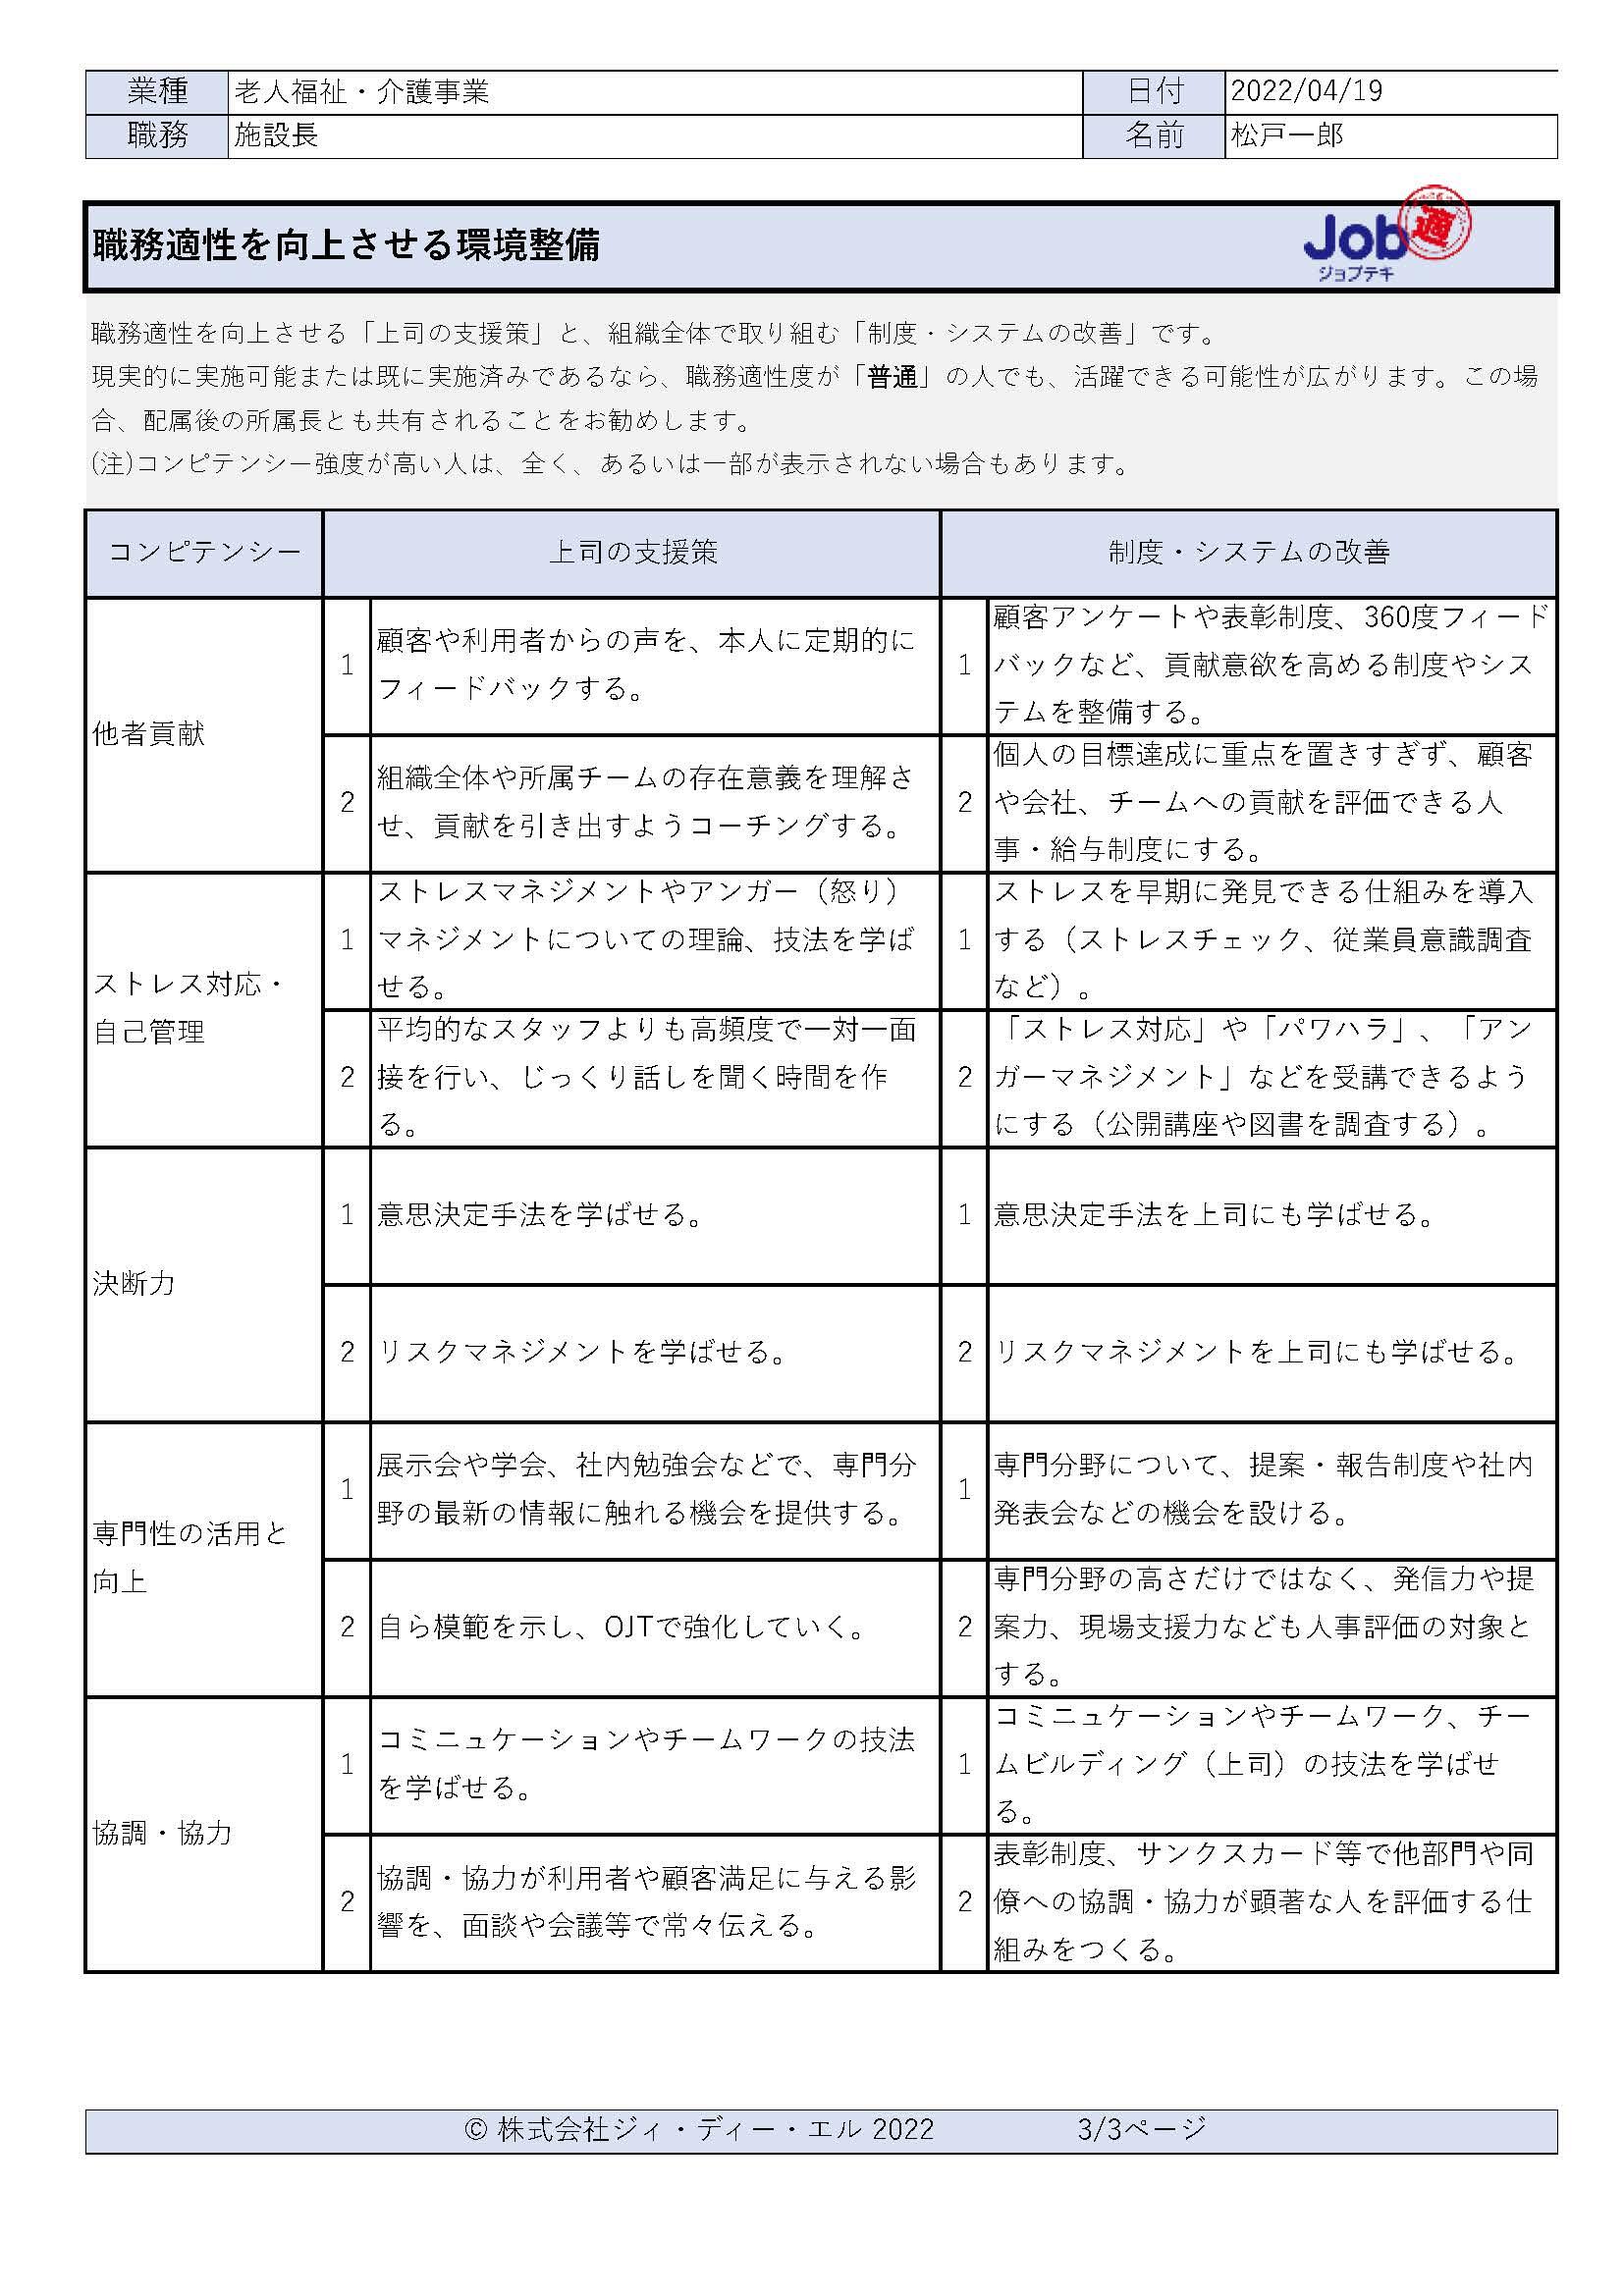 Job適_report3.jpg